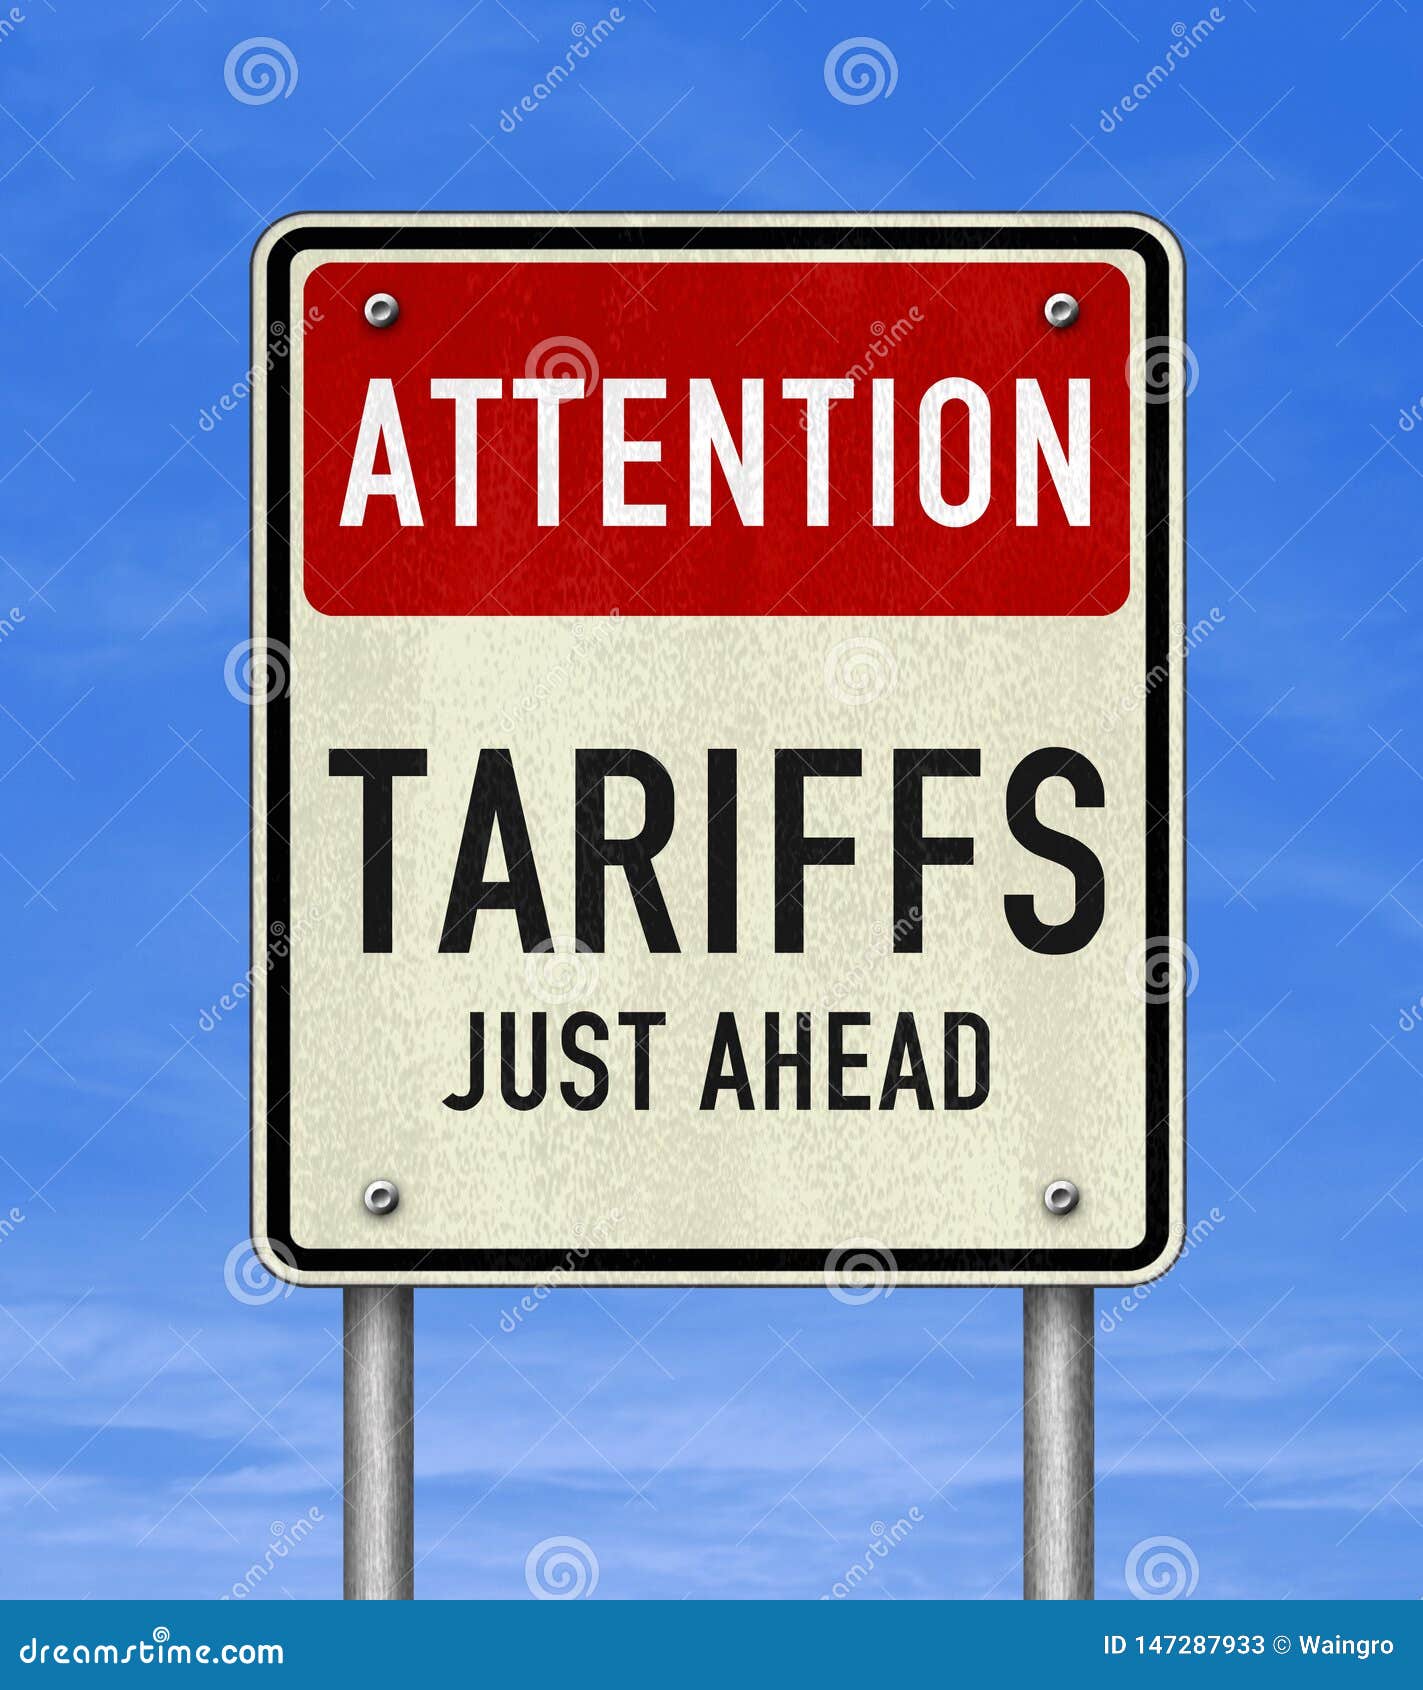 road sign message - tariffs just ahead